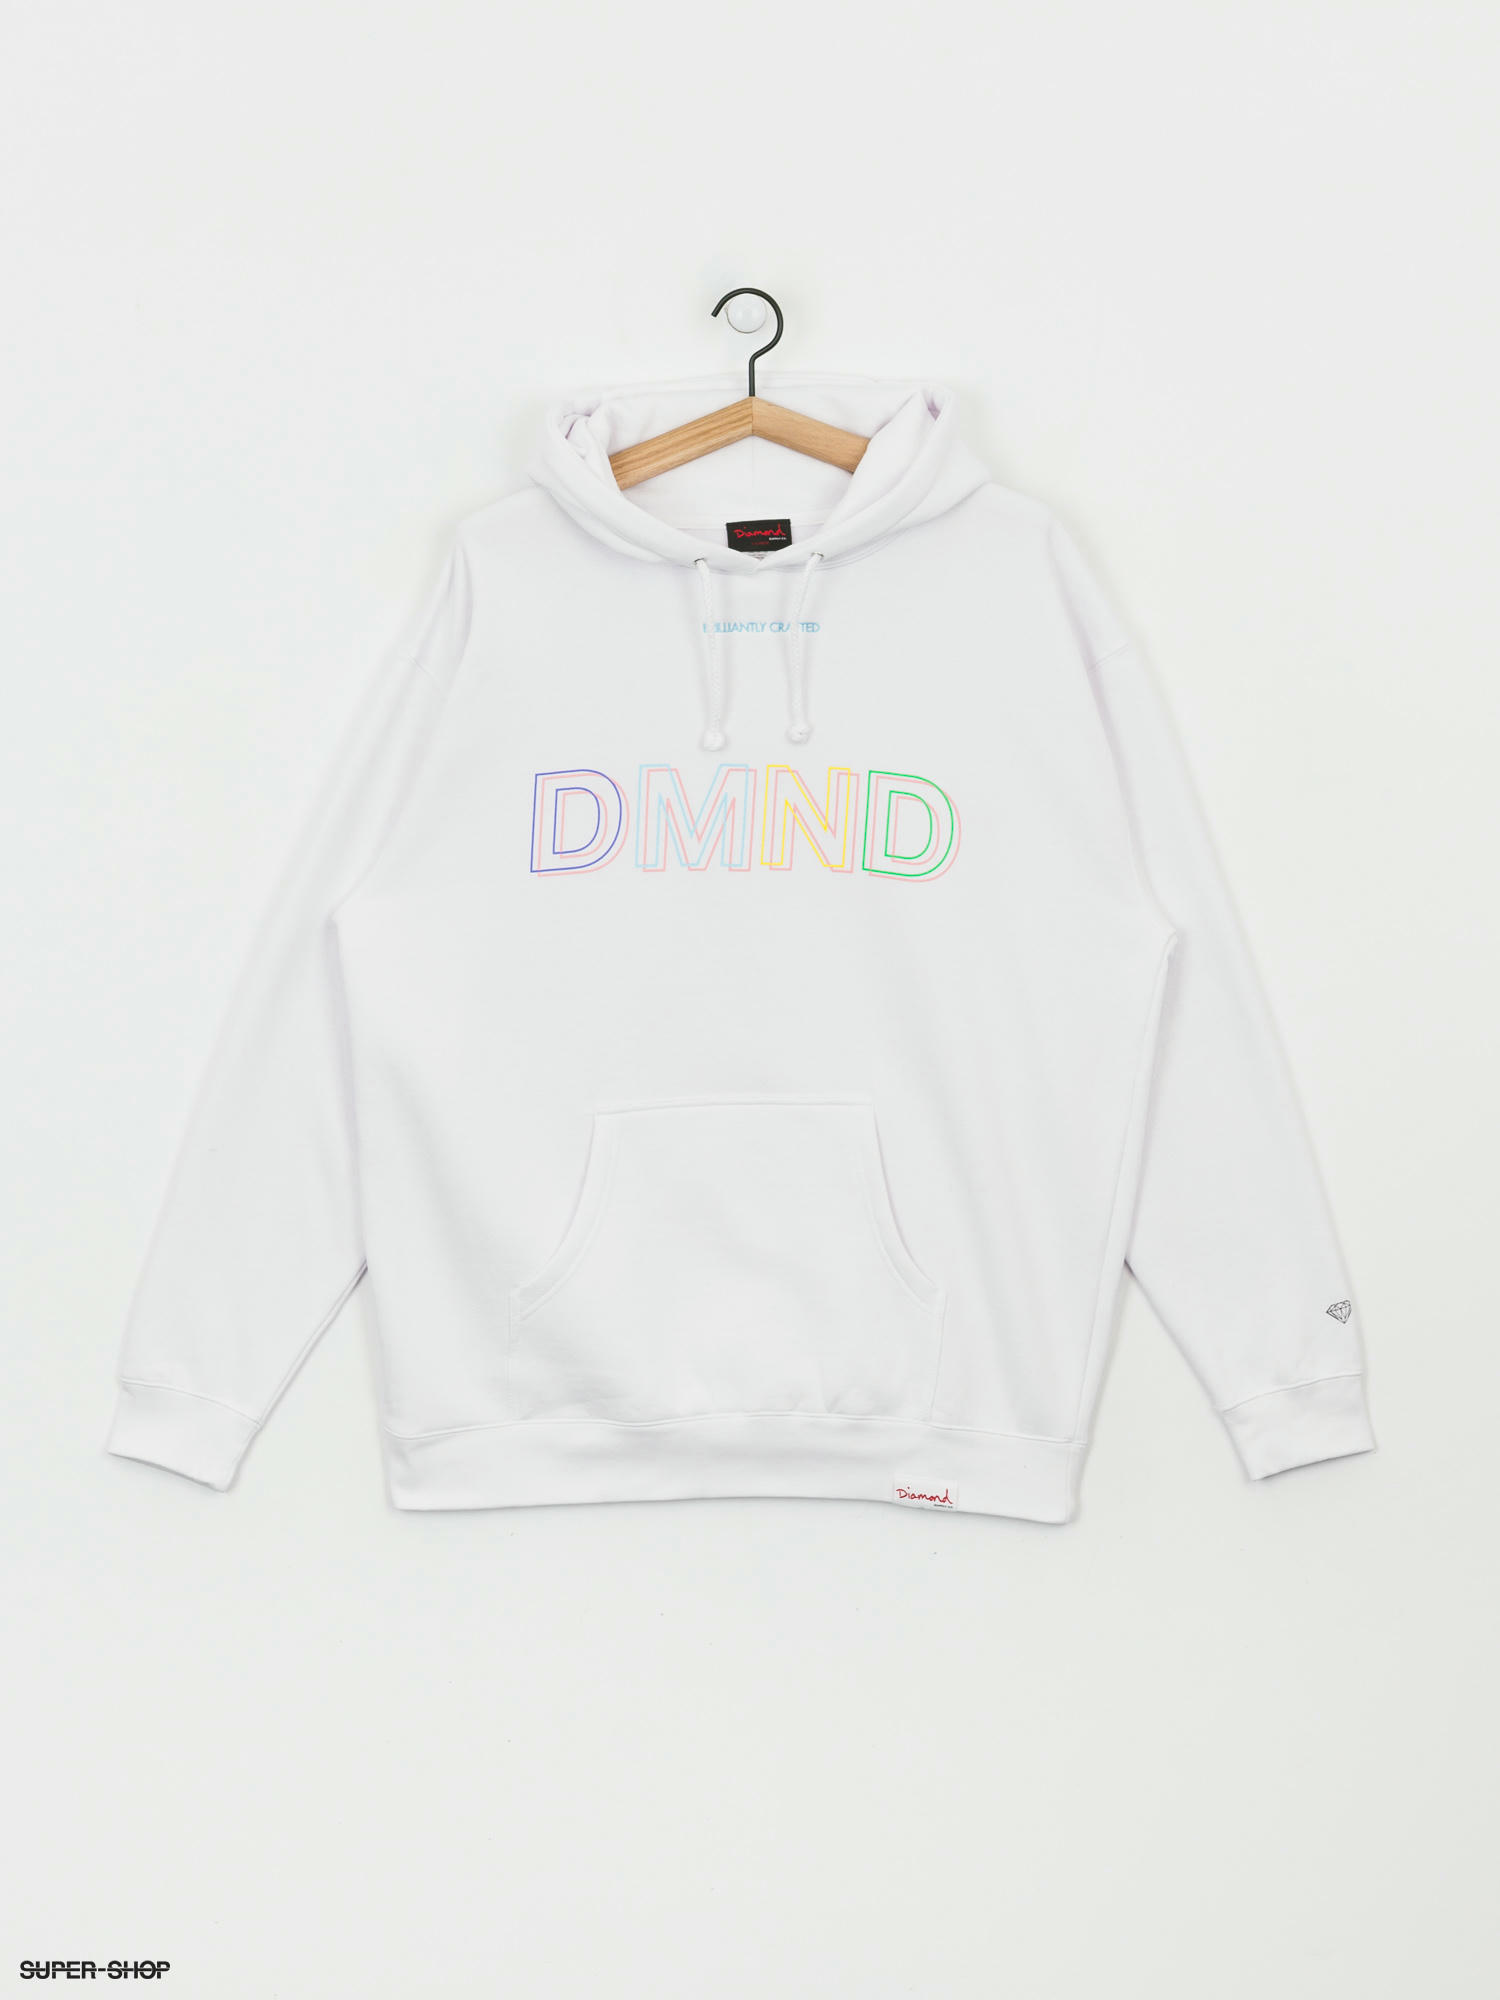 diamond hoodie white